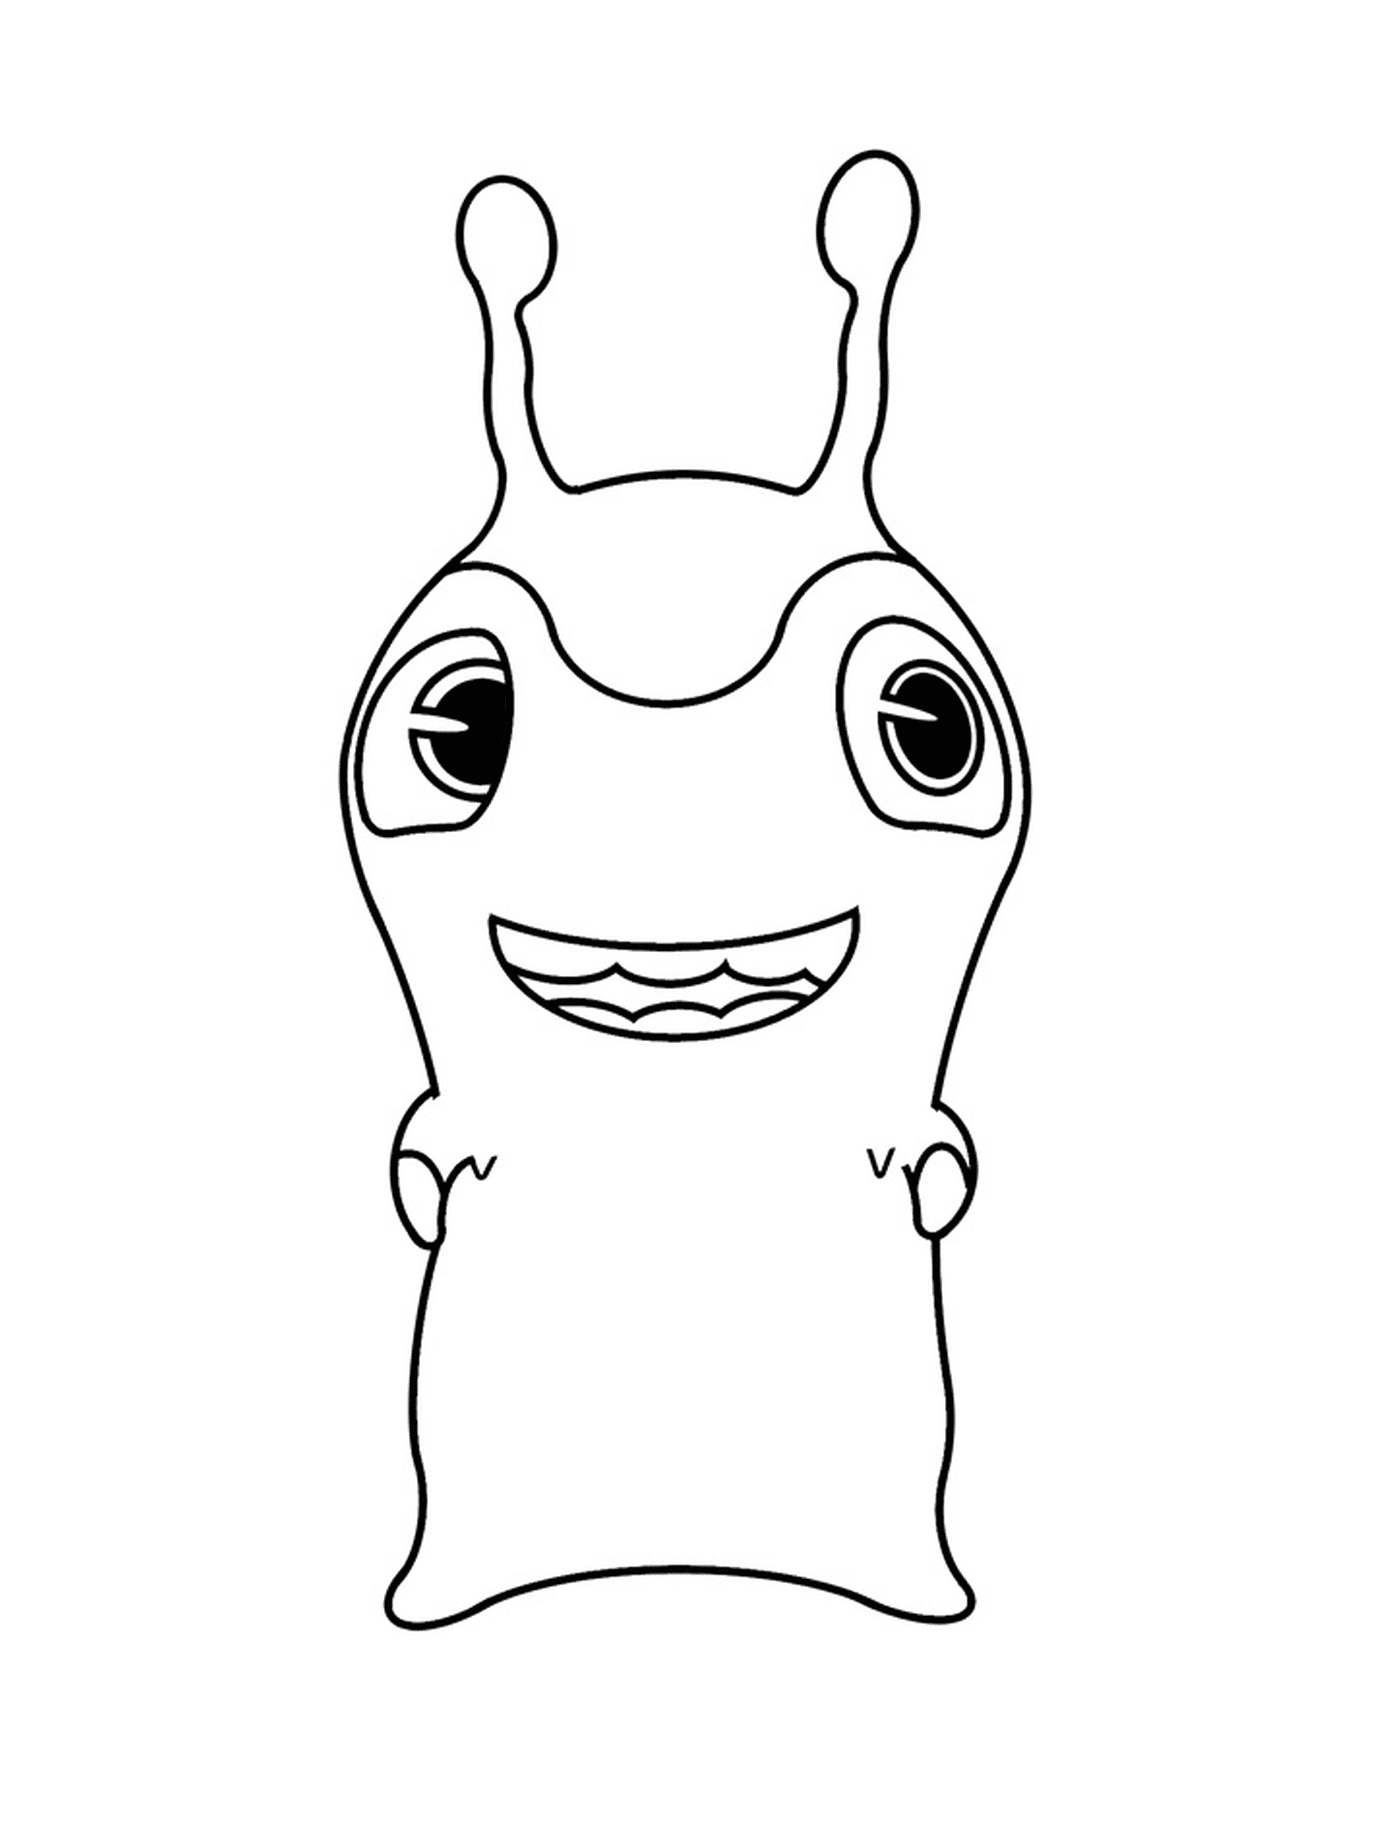  Jellyish, animal sonriente 